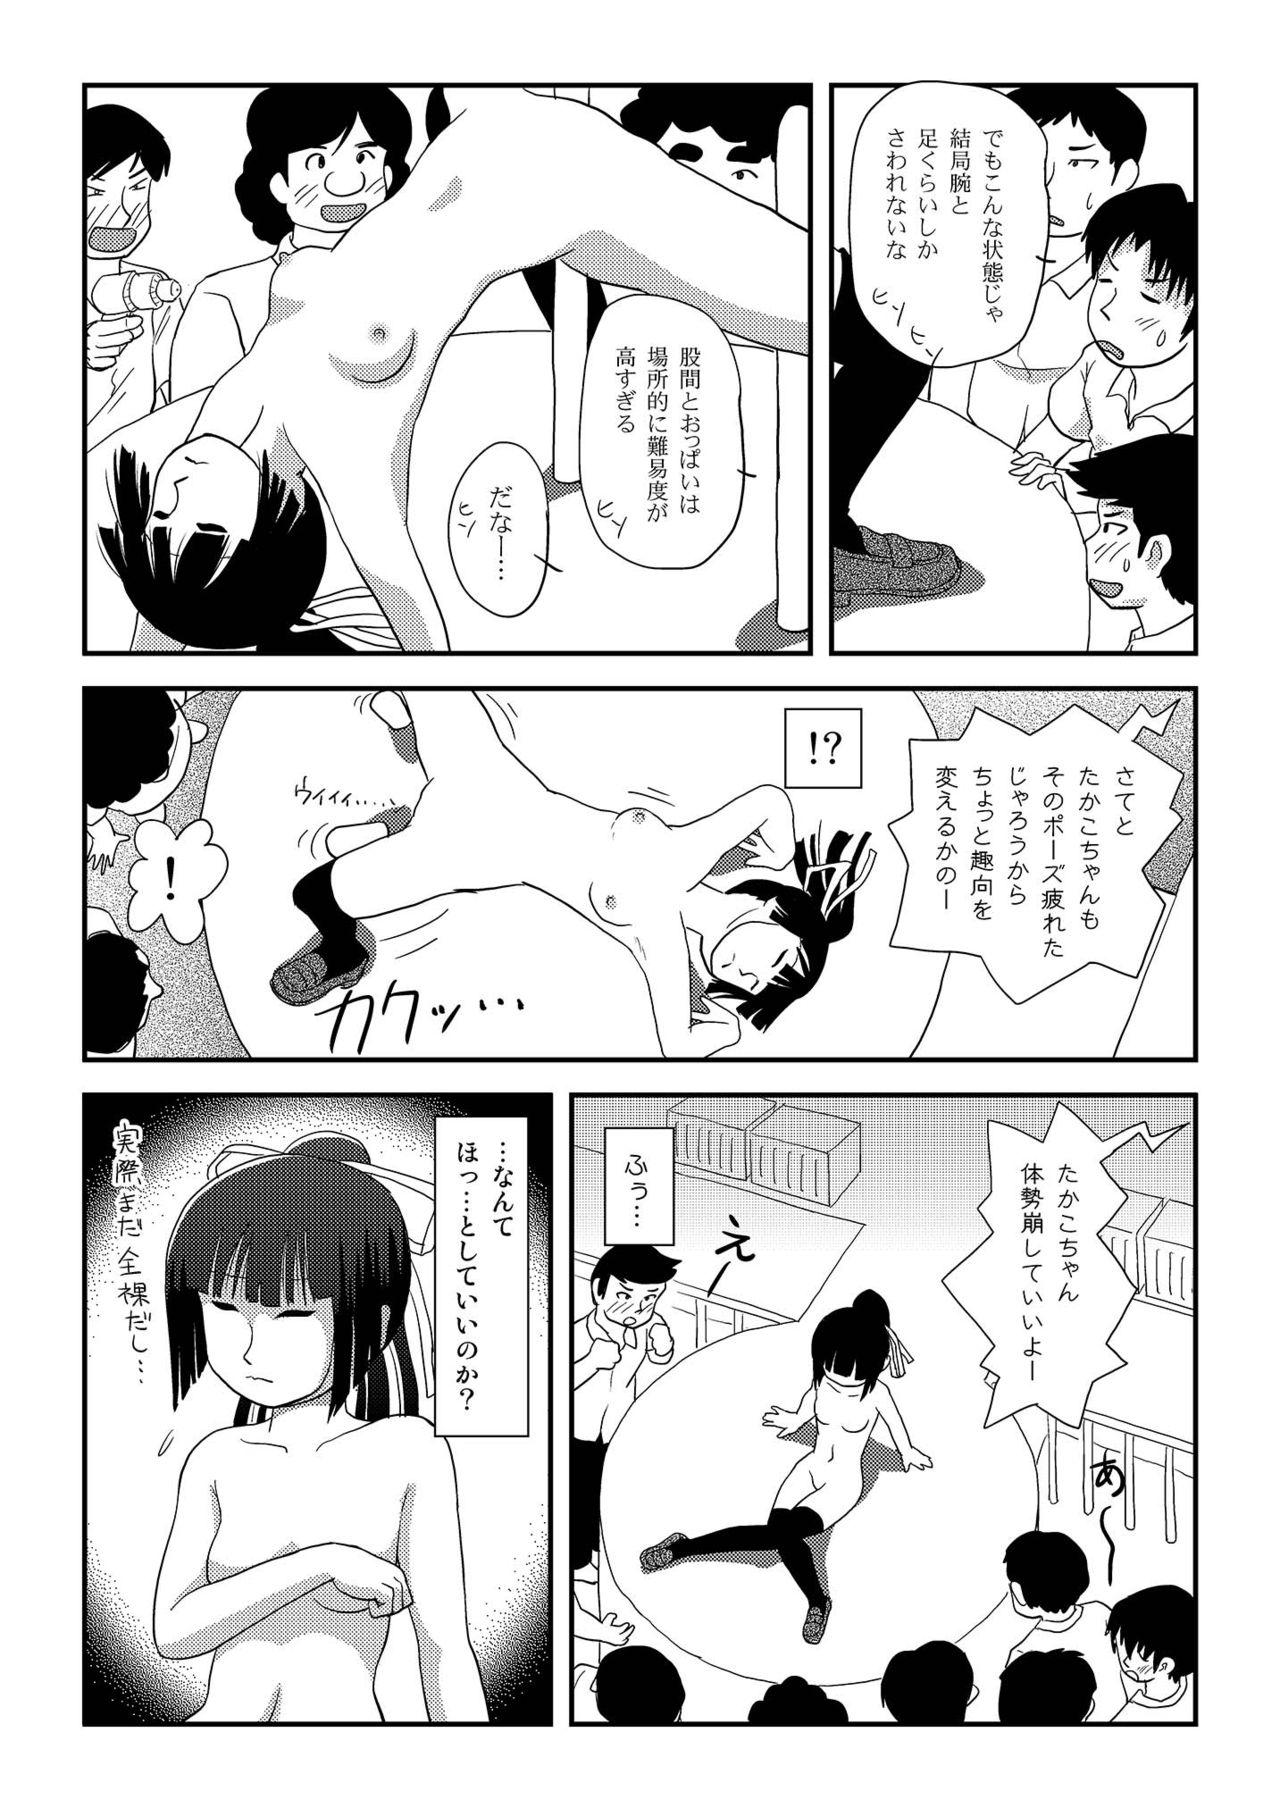 Pawg Sakura Kotaka no Roshutsubiyori 8 - Original Bang - Page 8